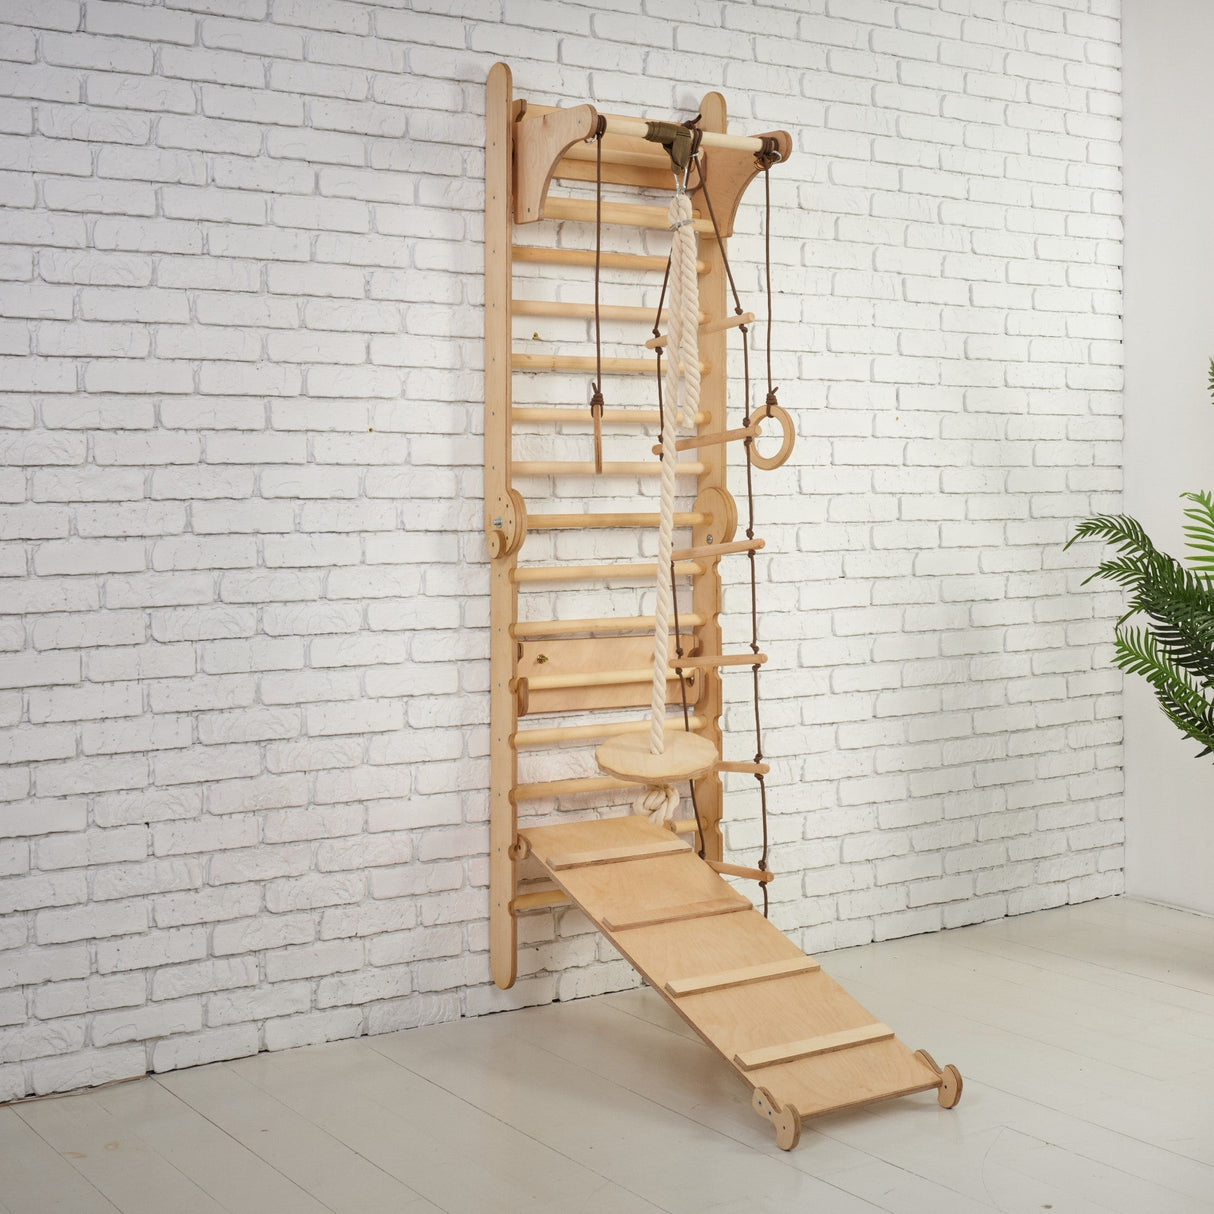 3in1: Wooden Swedish Wall / Climbing ladder for Children + Swing Set + Slide Board